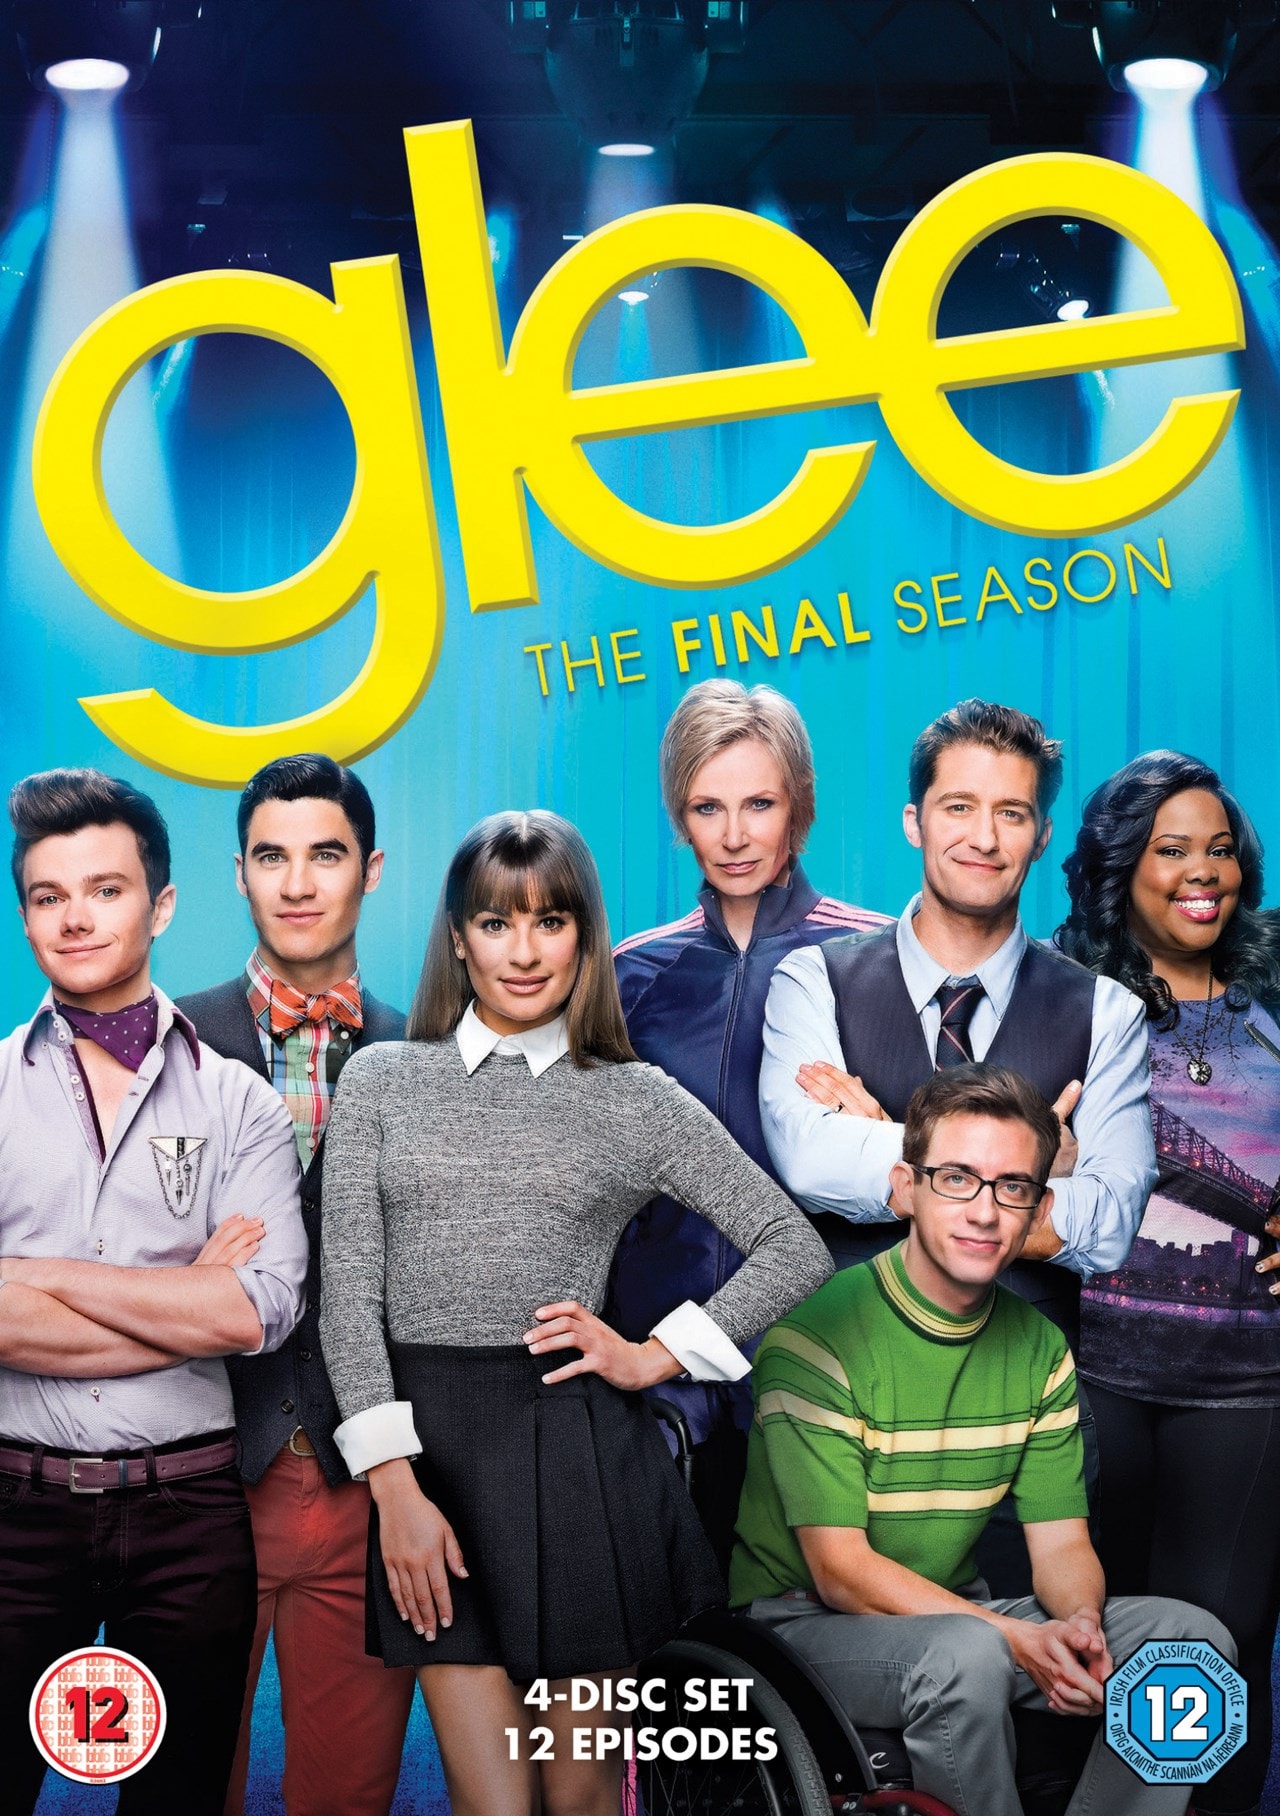 Glee The Final Season Dvd Box Set Free Shipping Over Hmv Store